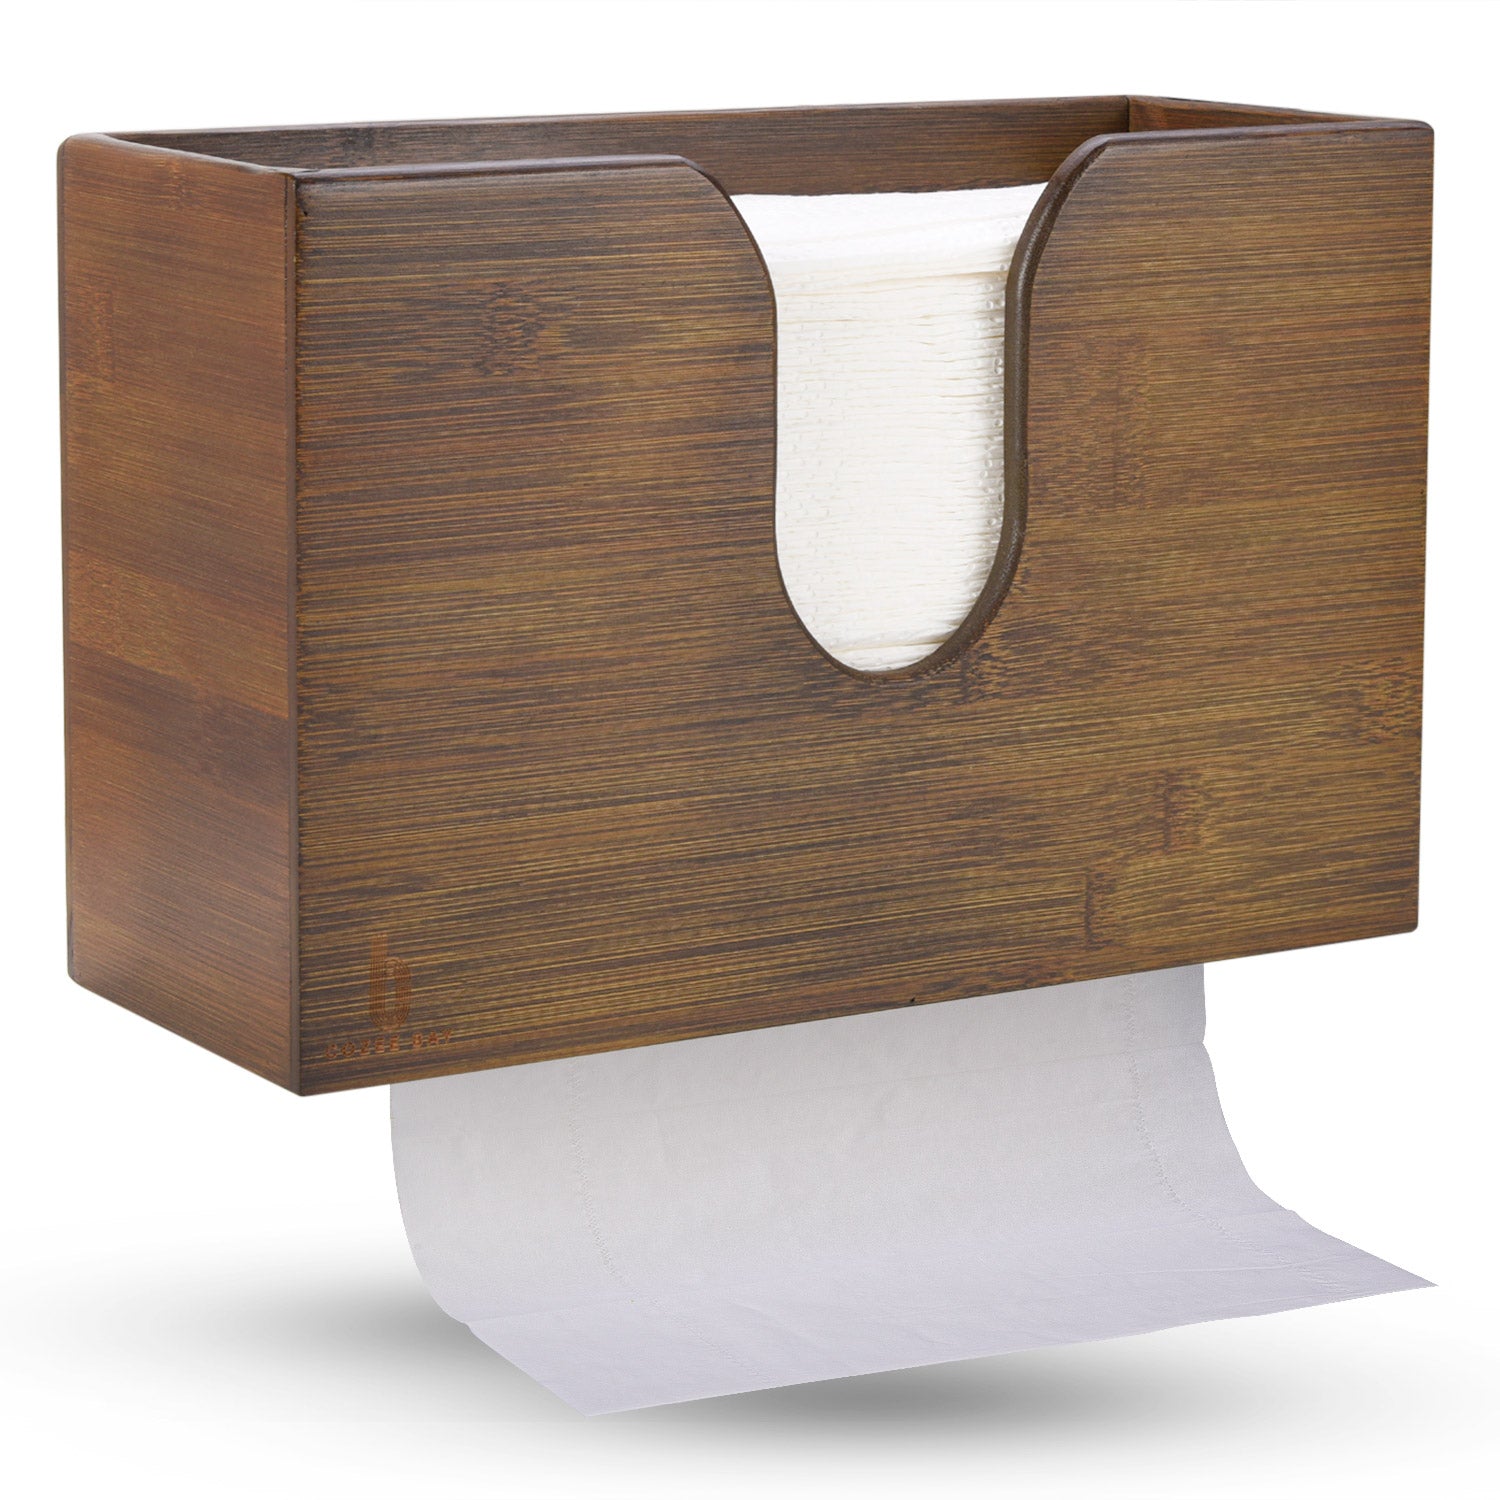 Cozee Bay Paper Towel Dispenser for Kitchen & Bathroom (Vintage Brown)